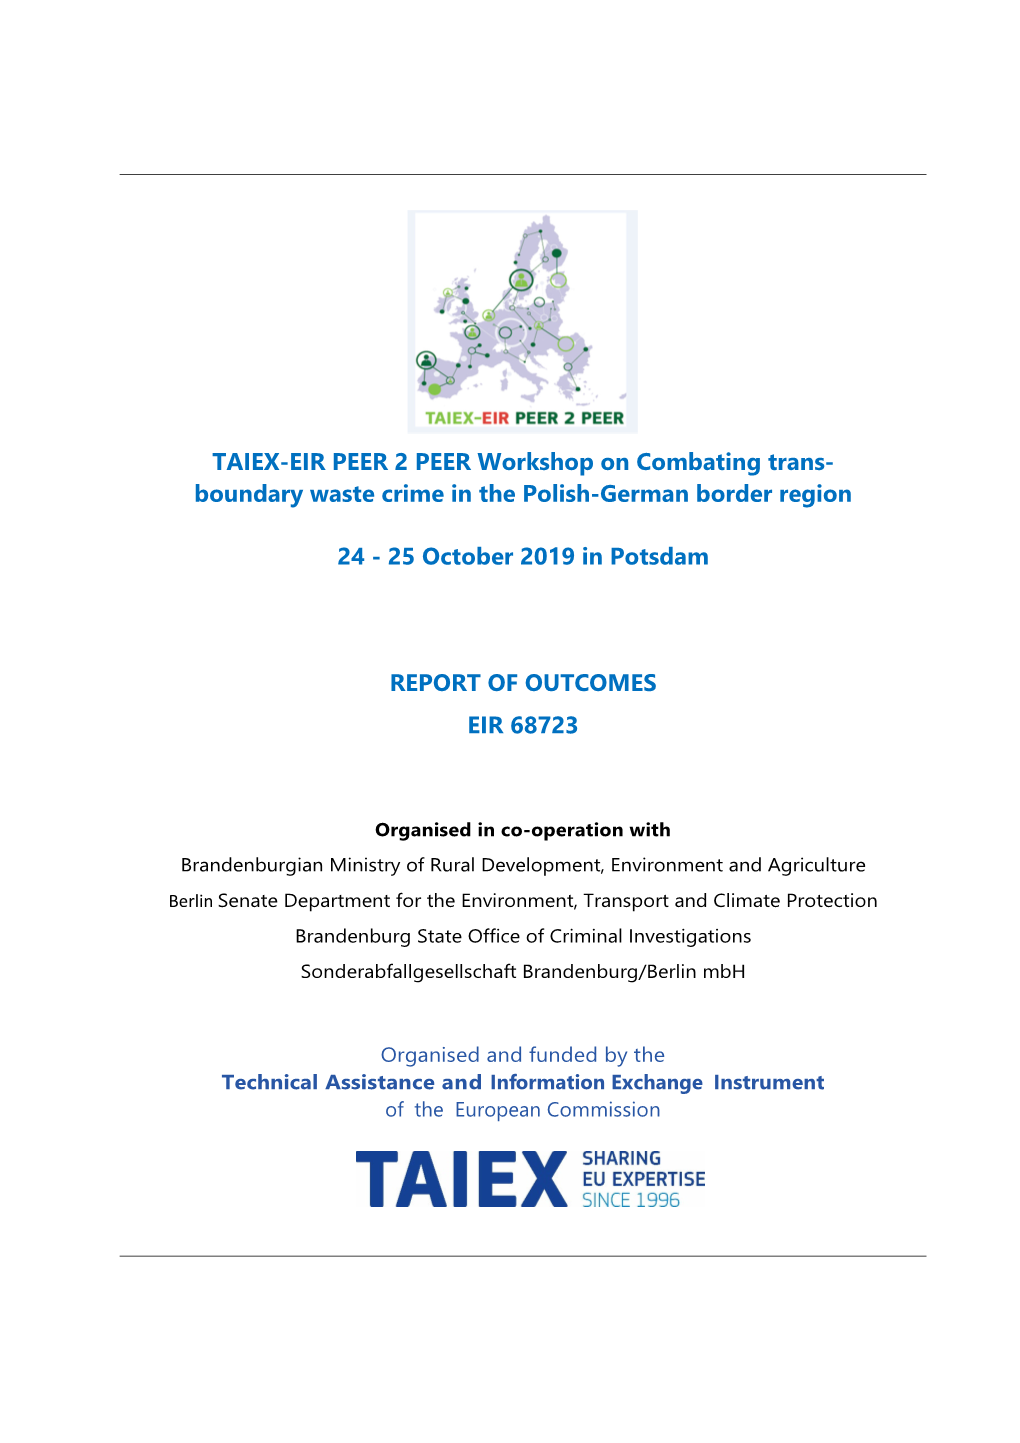 TAIEX-EIR PEER 2 PEER Workshop on Combating Transboundary Waste Crime in the Polish-German Border Region 24